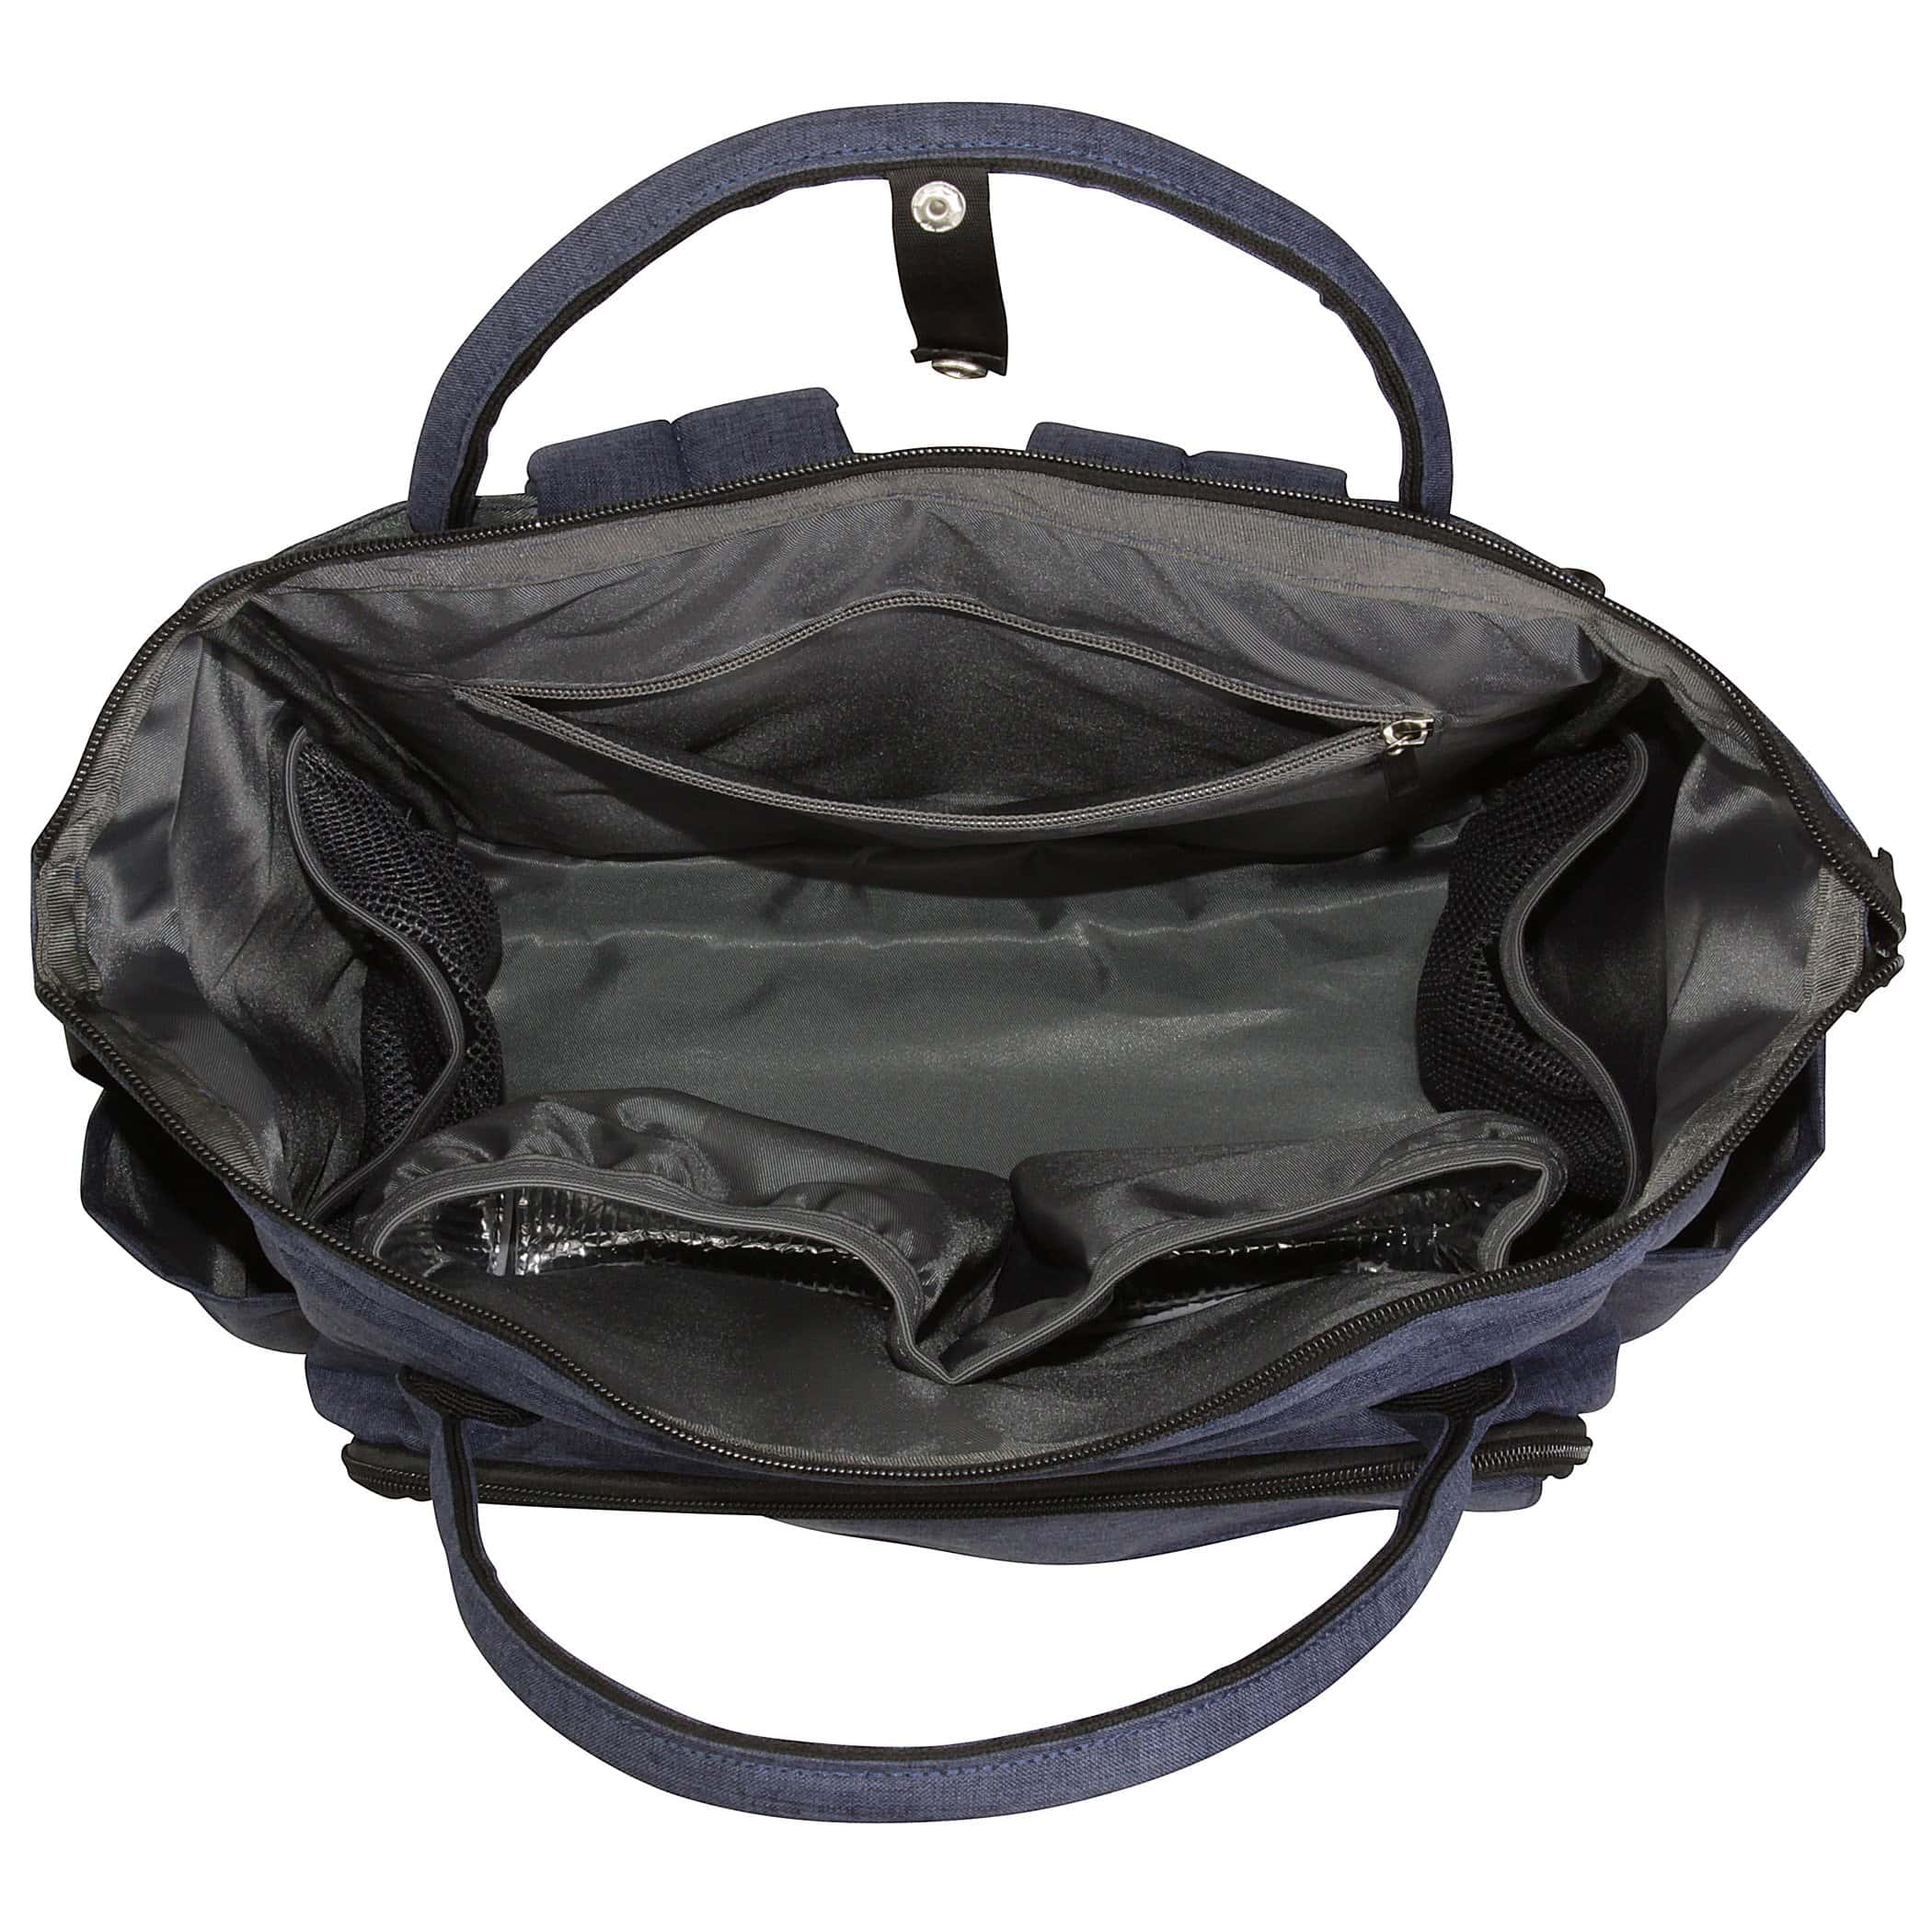 Nola Backpack - Navy Diaper Bag - Jack and Jill Boutique